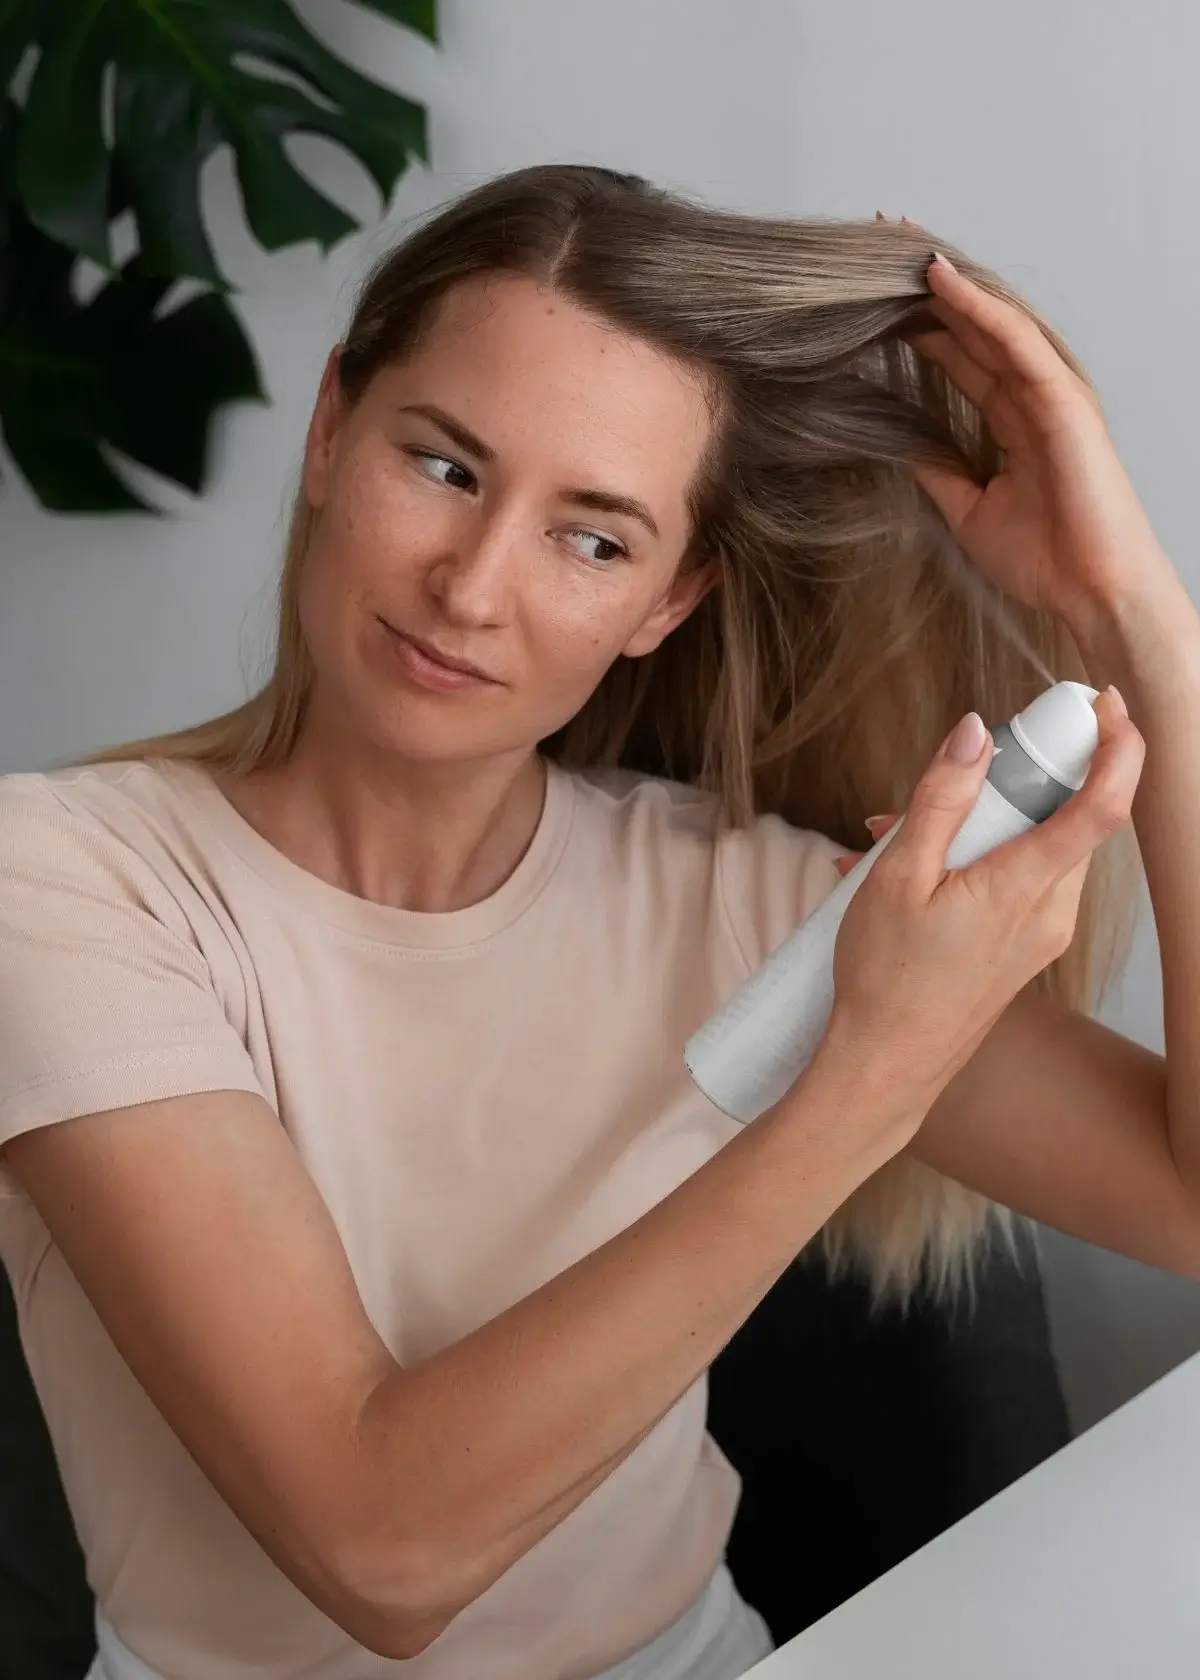 How does hair lightening spray work?